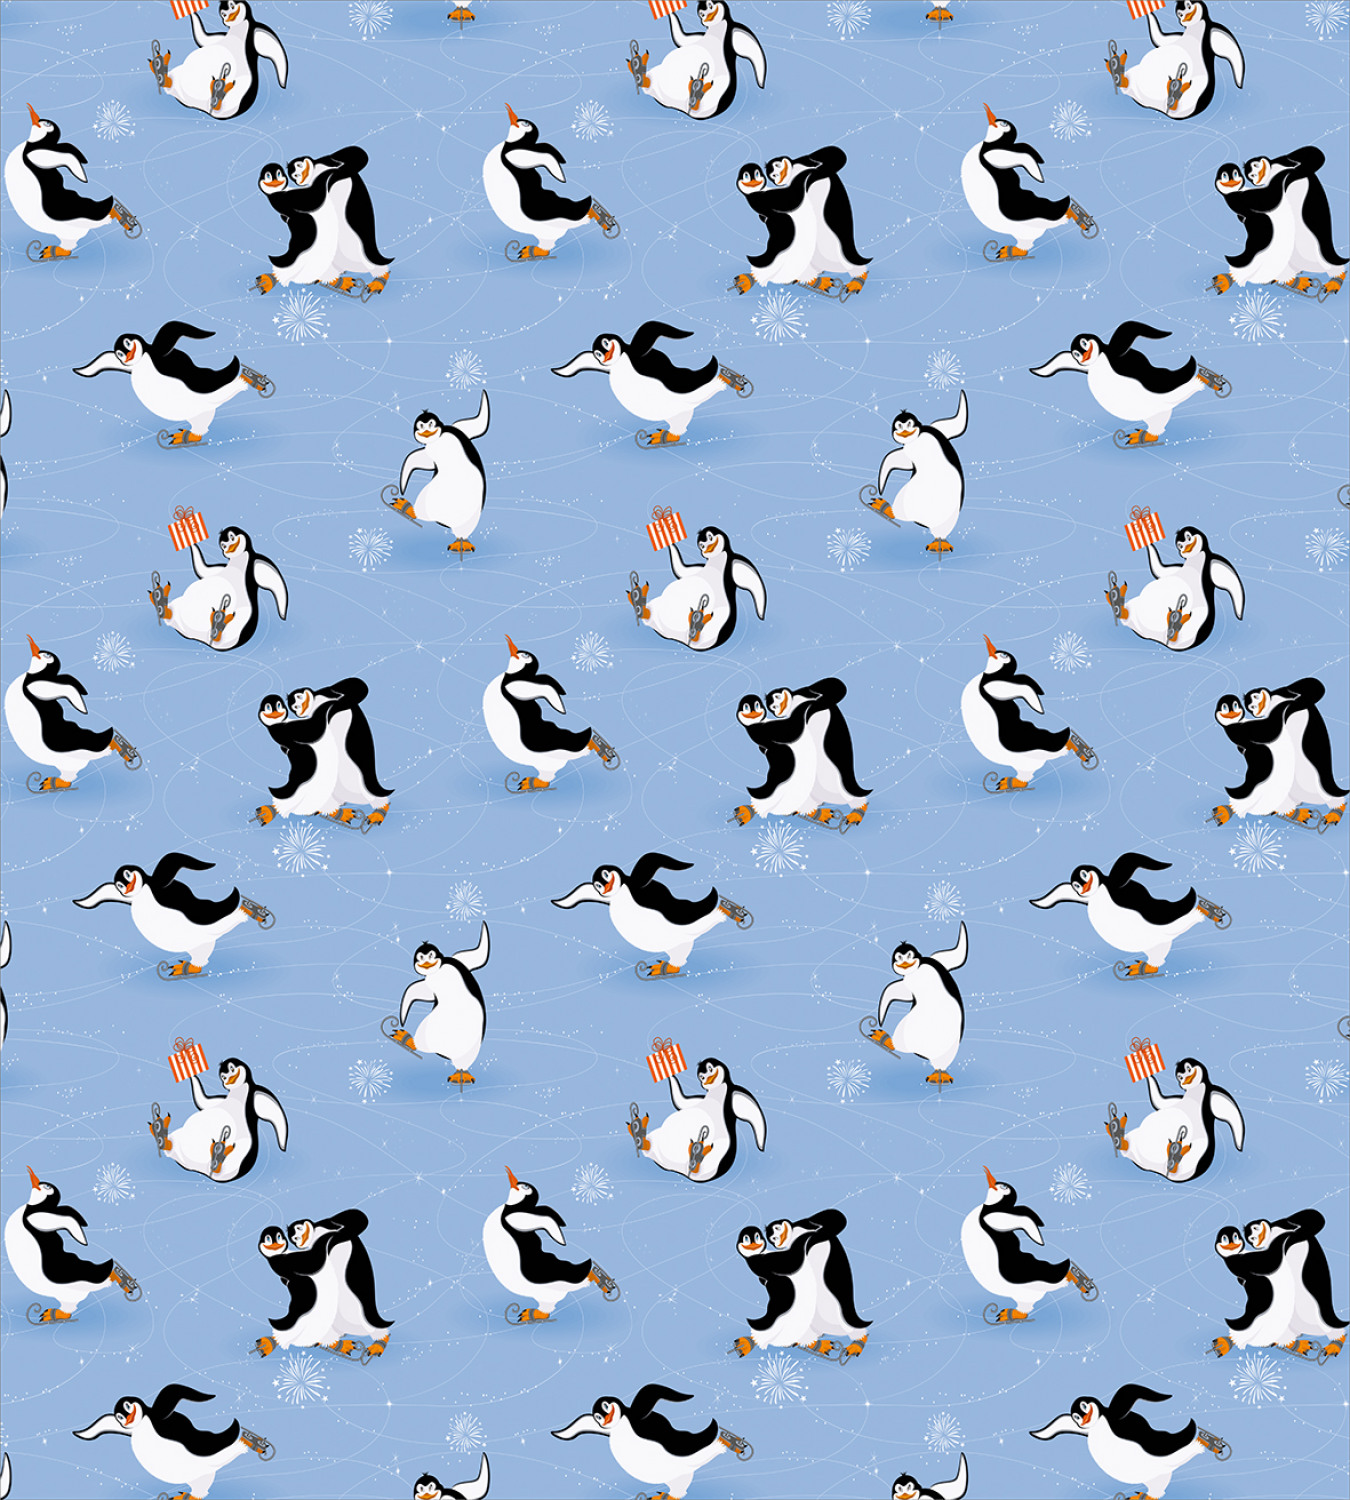 Details about   Cartoon Animal Quilted Bedspread & Pillow Shams Set Skating Penguins Print 